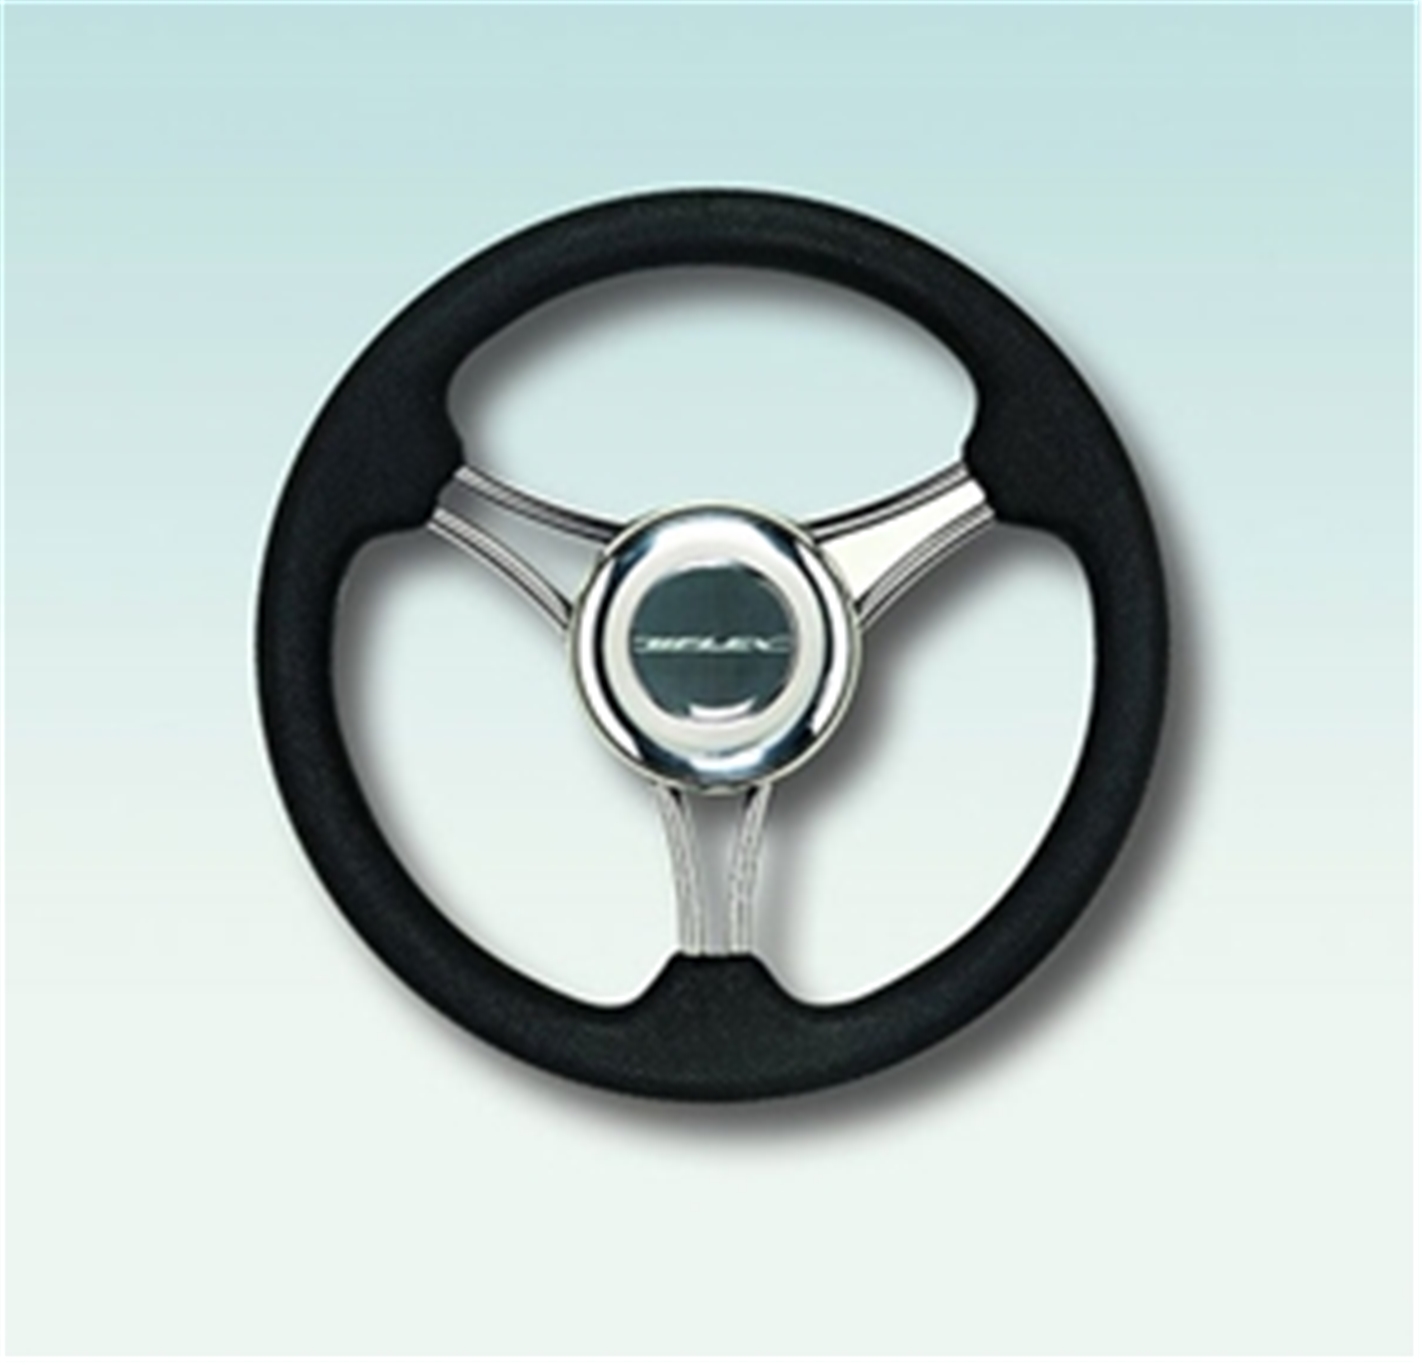 V21B Firm Grip Black Poly Steering Wheel 13.8"